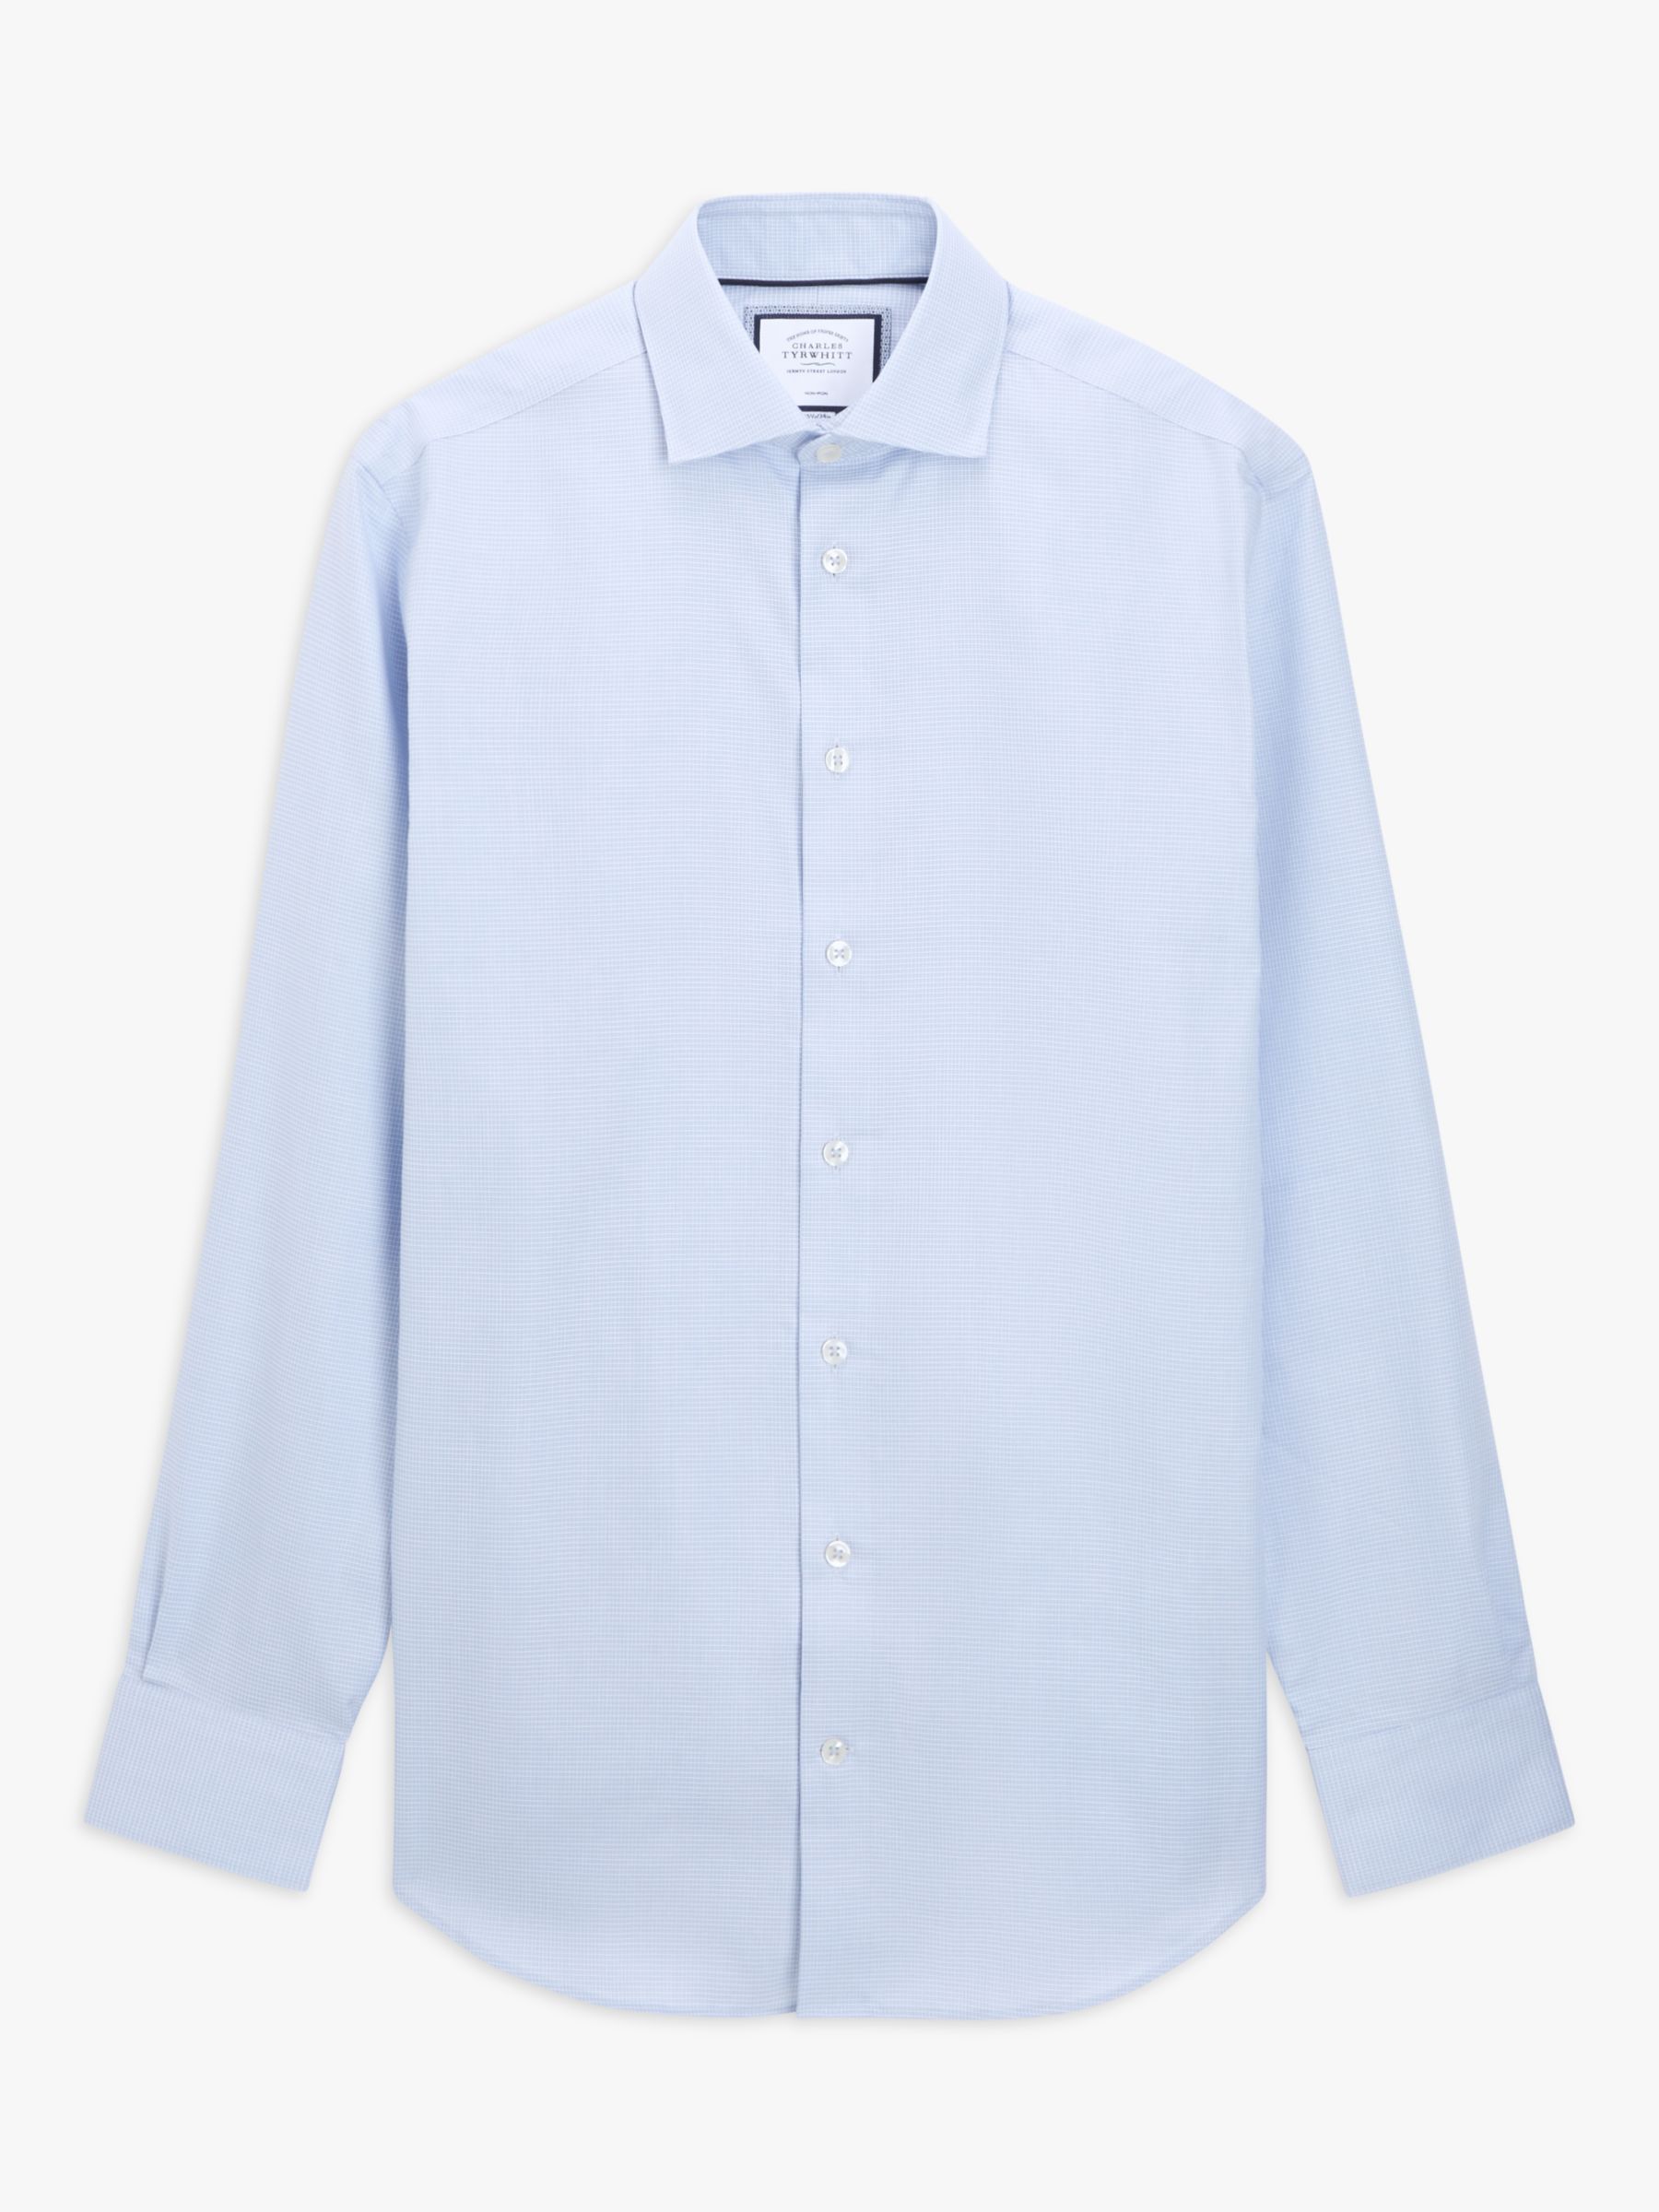 Charles Tyrwhitt Classic Cotton Shirt, Sky Blue at John Lewis & Partners